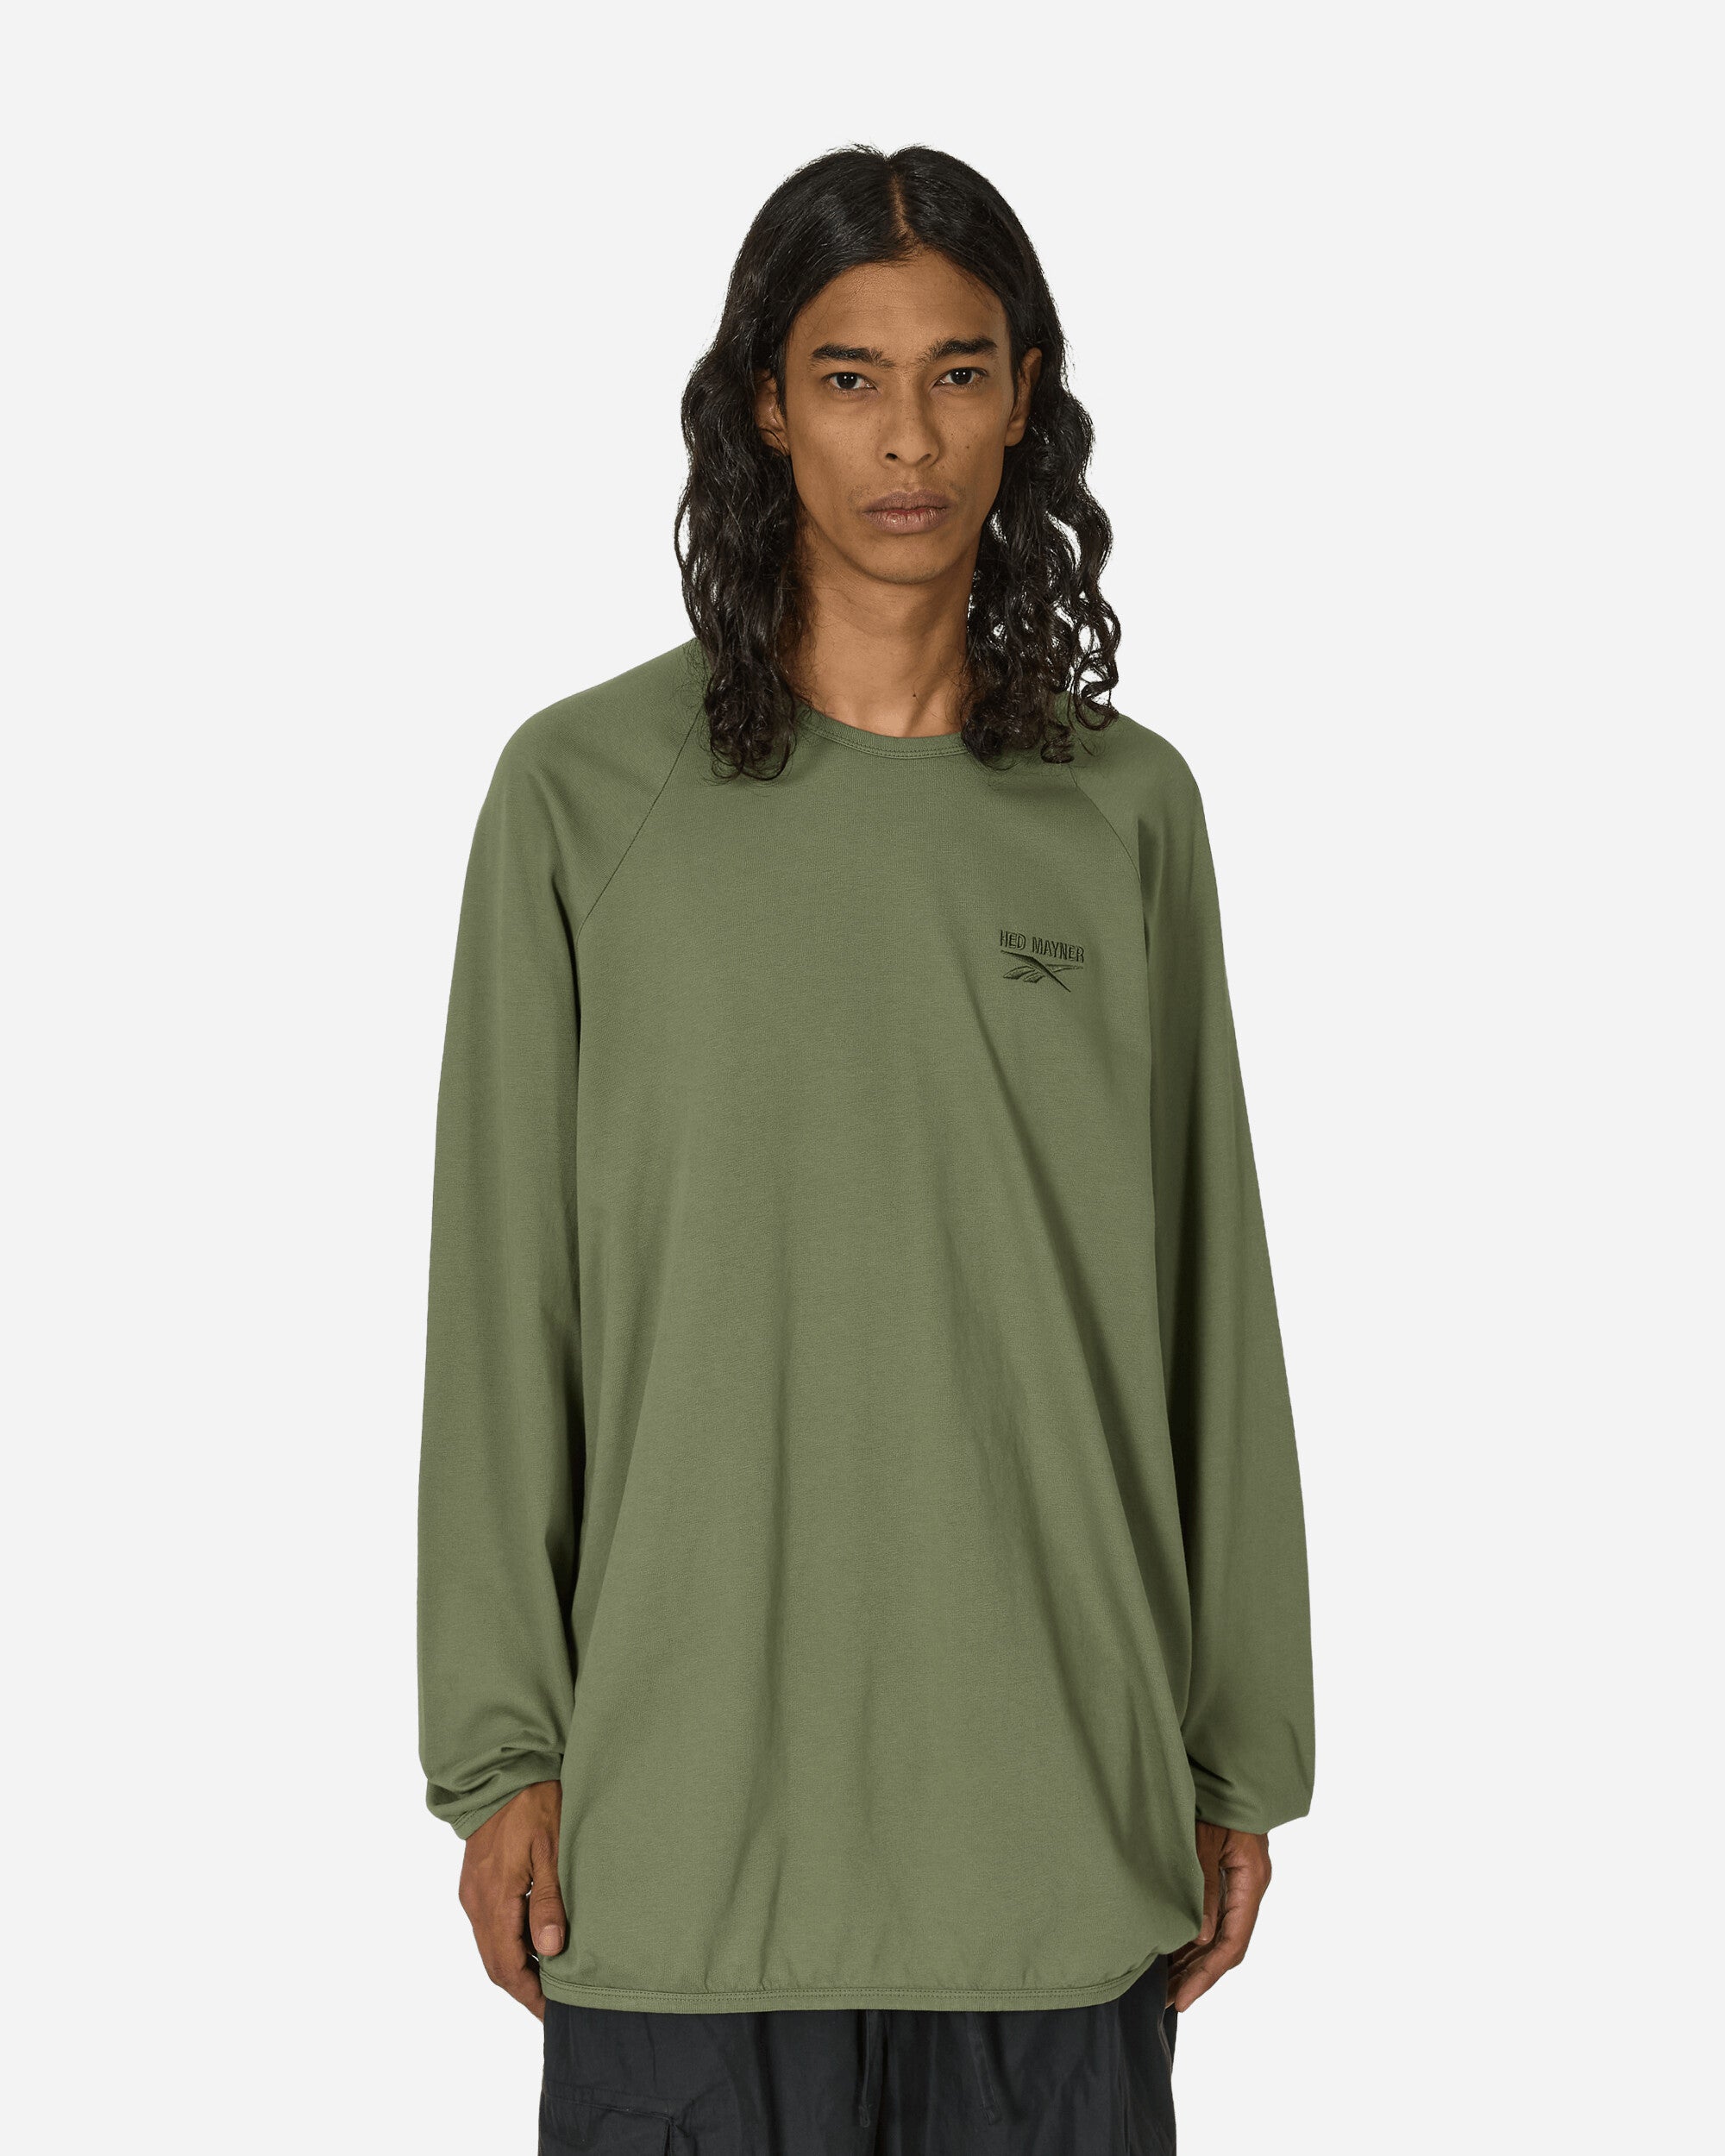 Hed Mayner Oversized Raglan Longsleeve T-Shirt Army Green